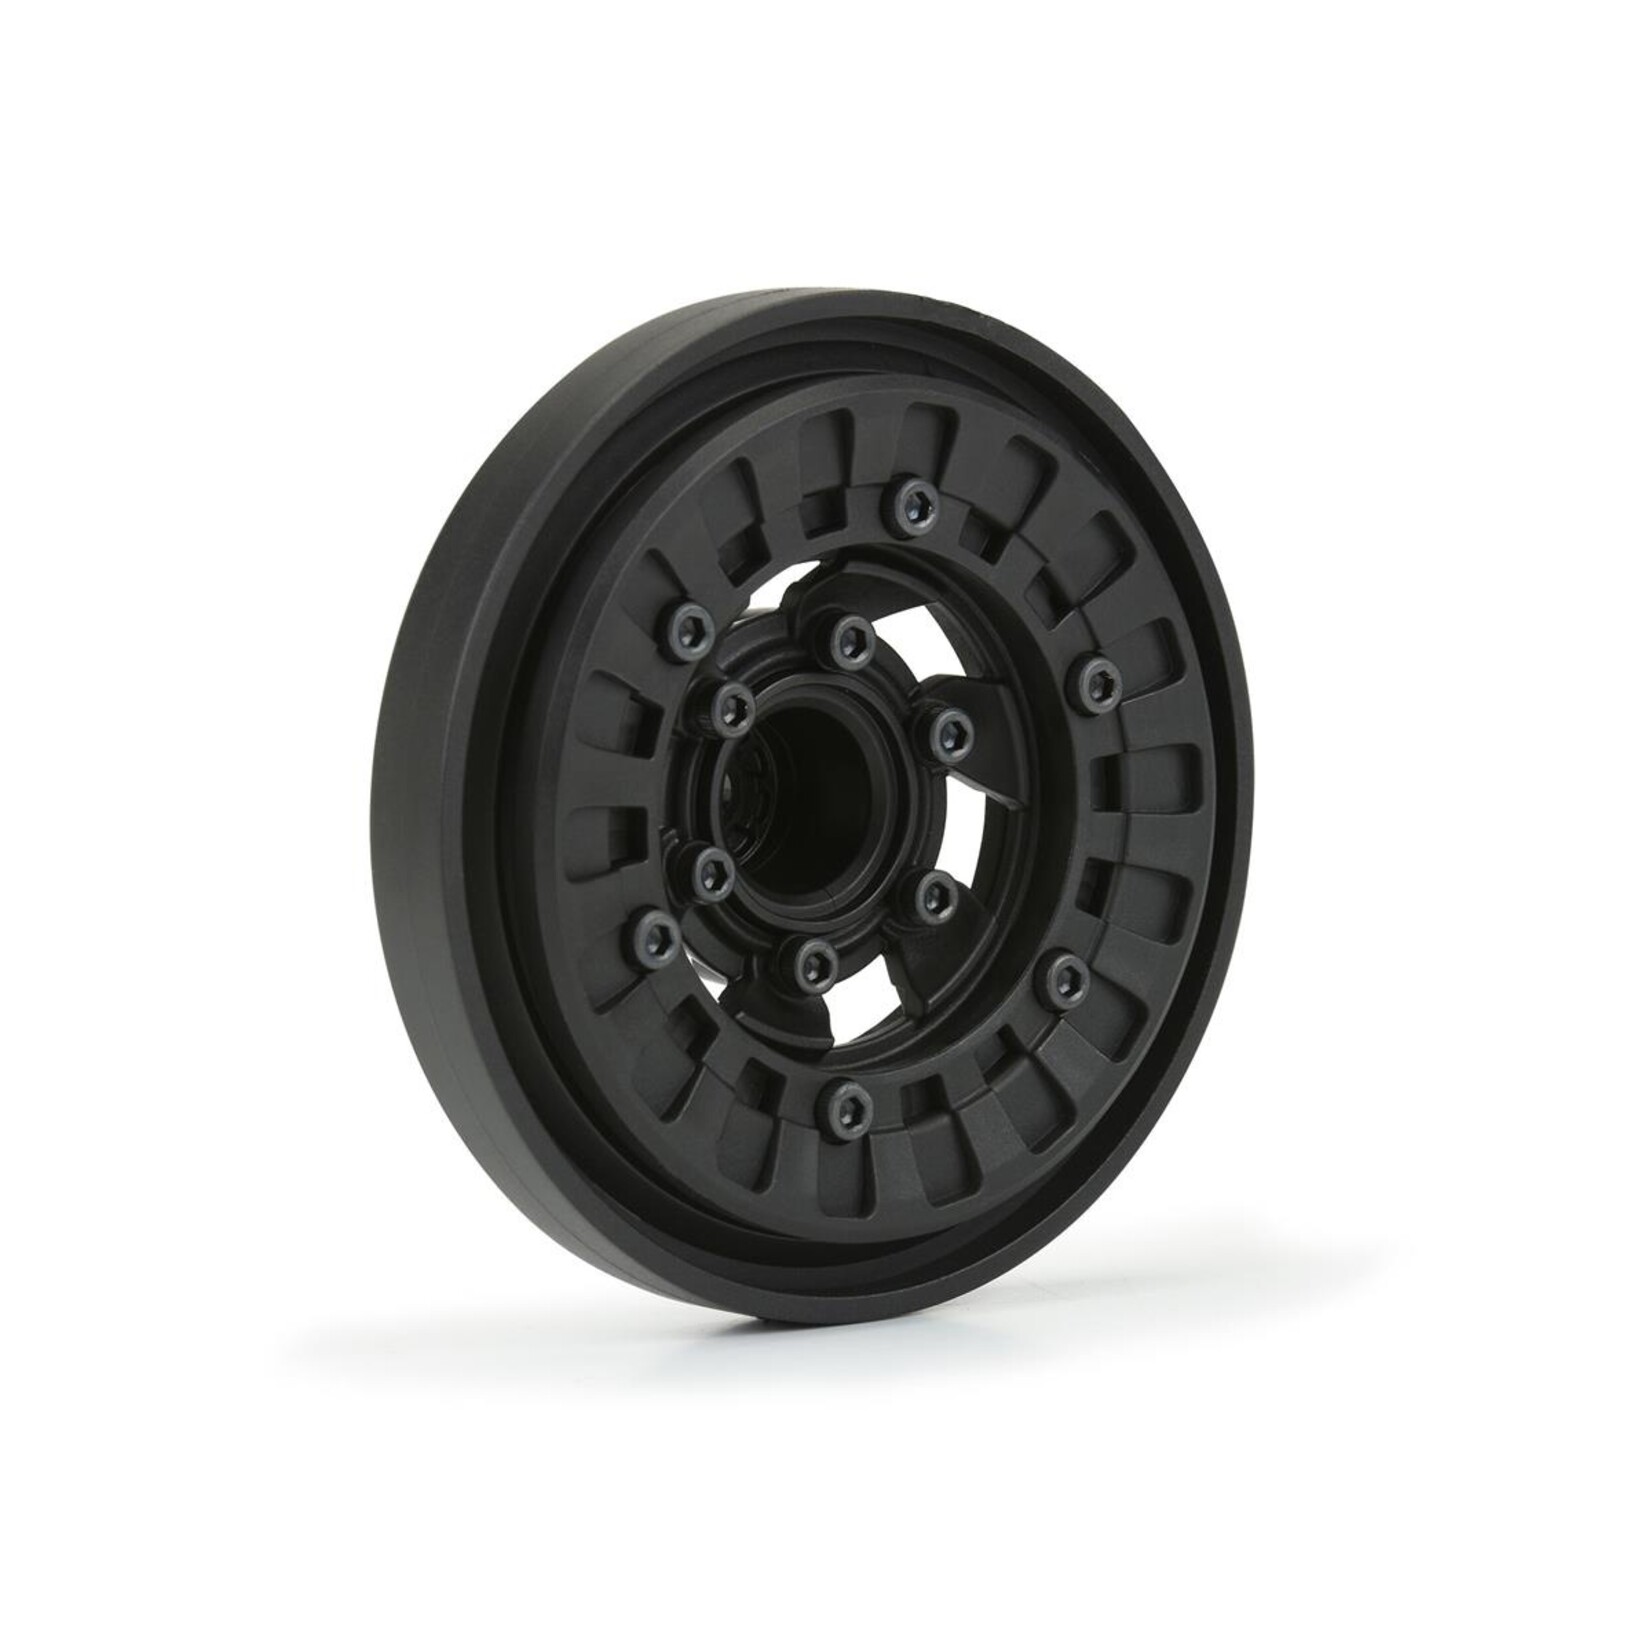 Pro-Line Pro-Line Vice CrushLock 2.6" Monster Truck Wheel (Black) (2) #PRO2789-03